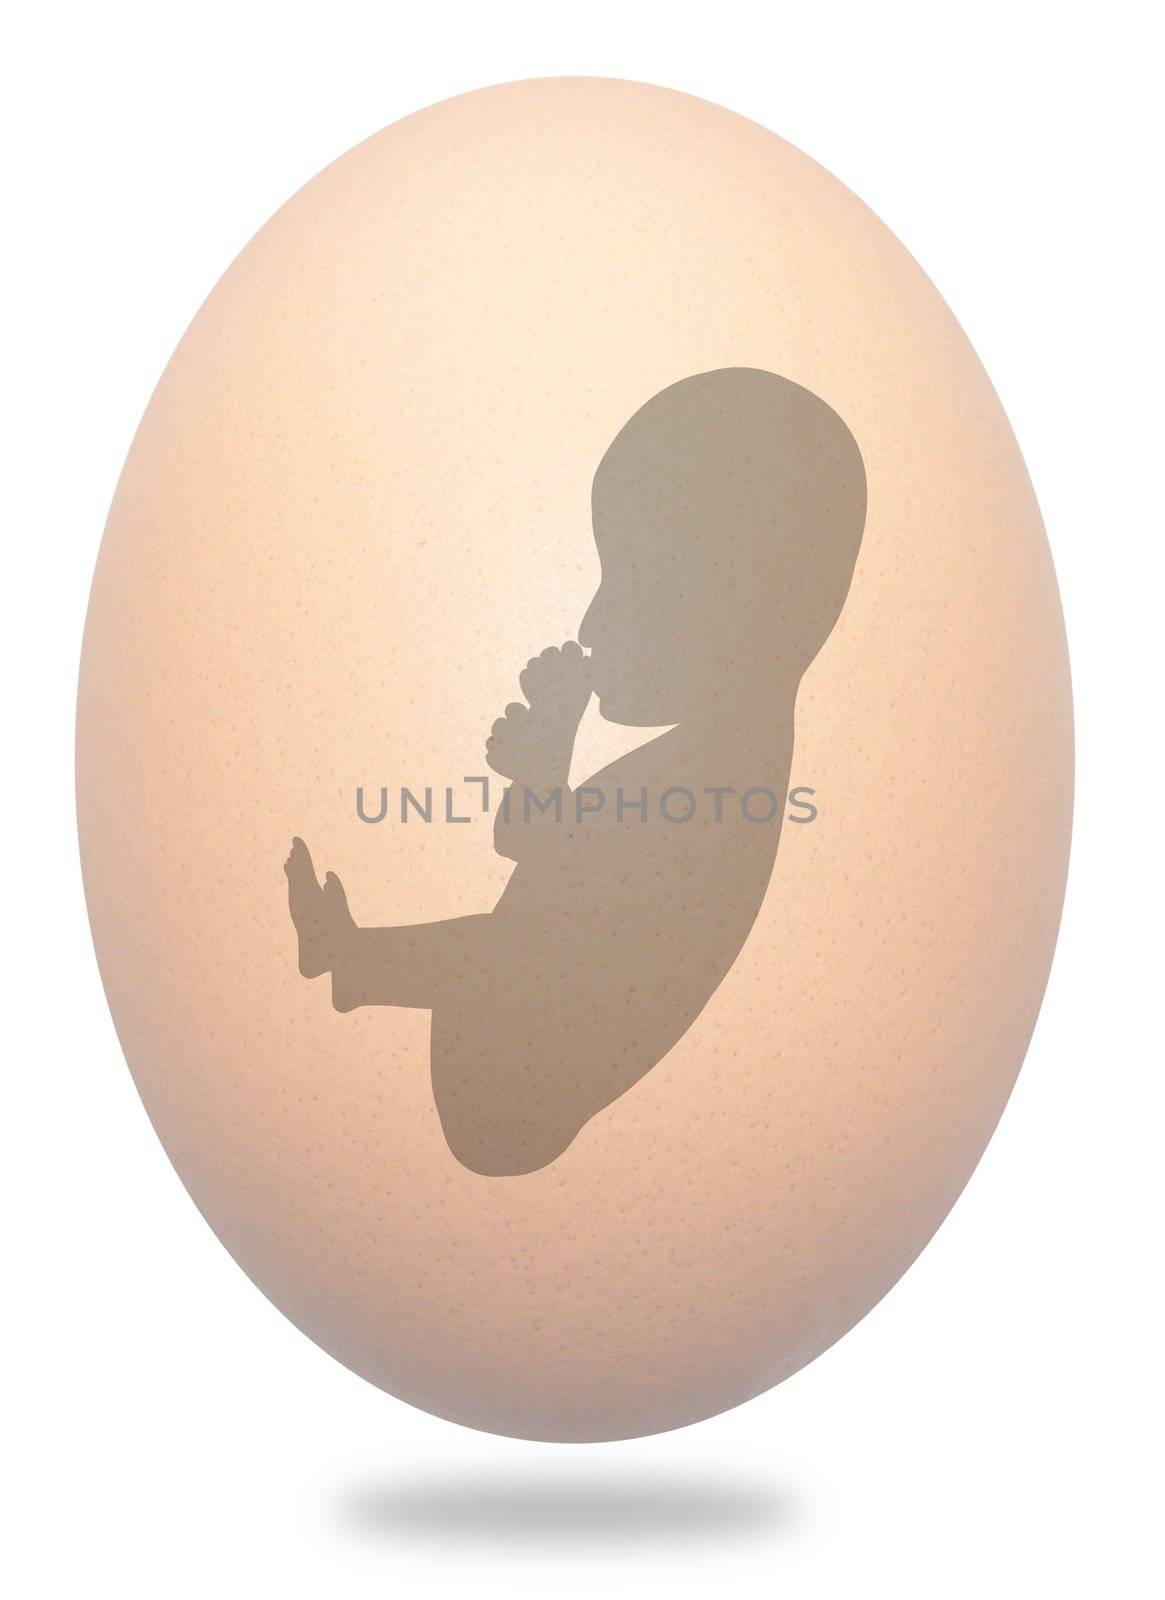 Foetus in egg by darrenwhittingham